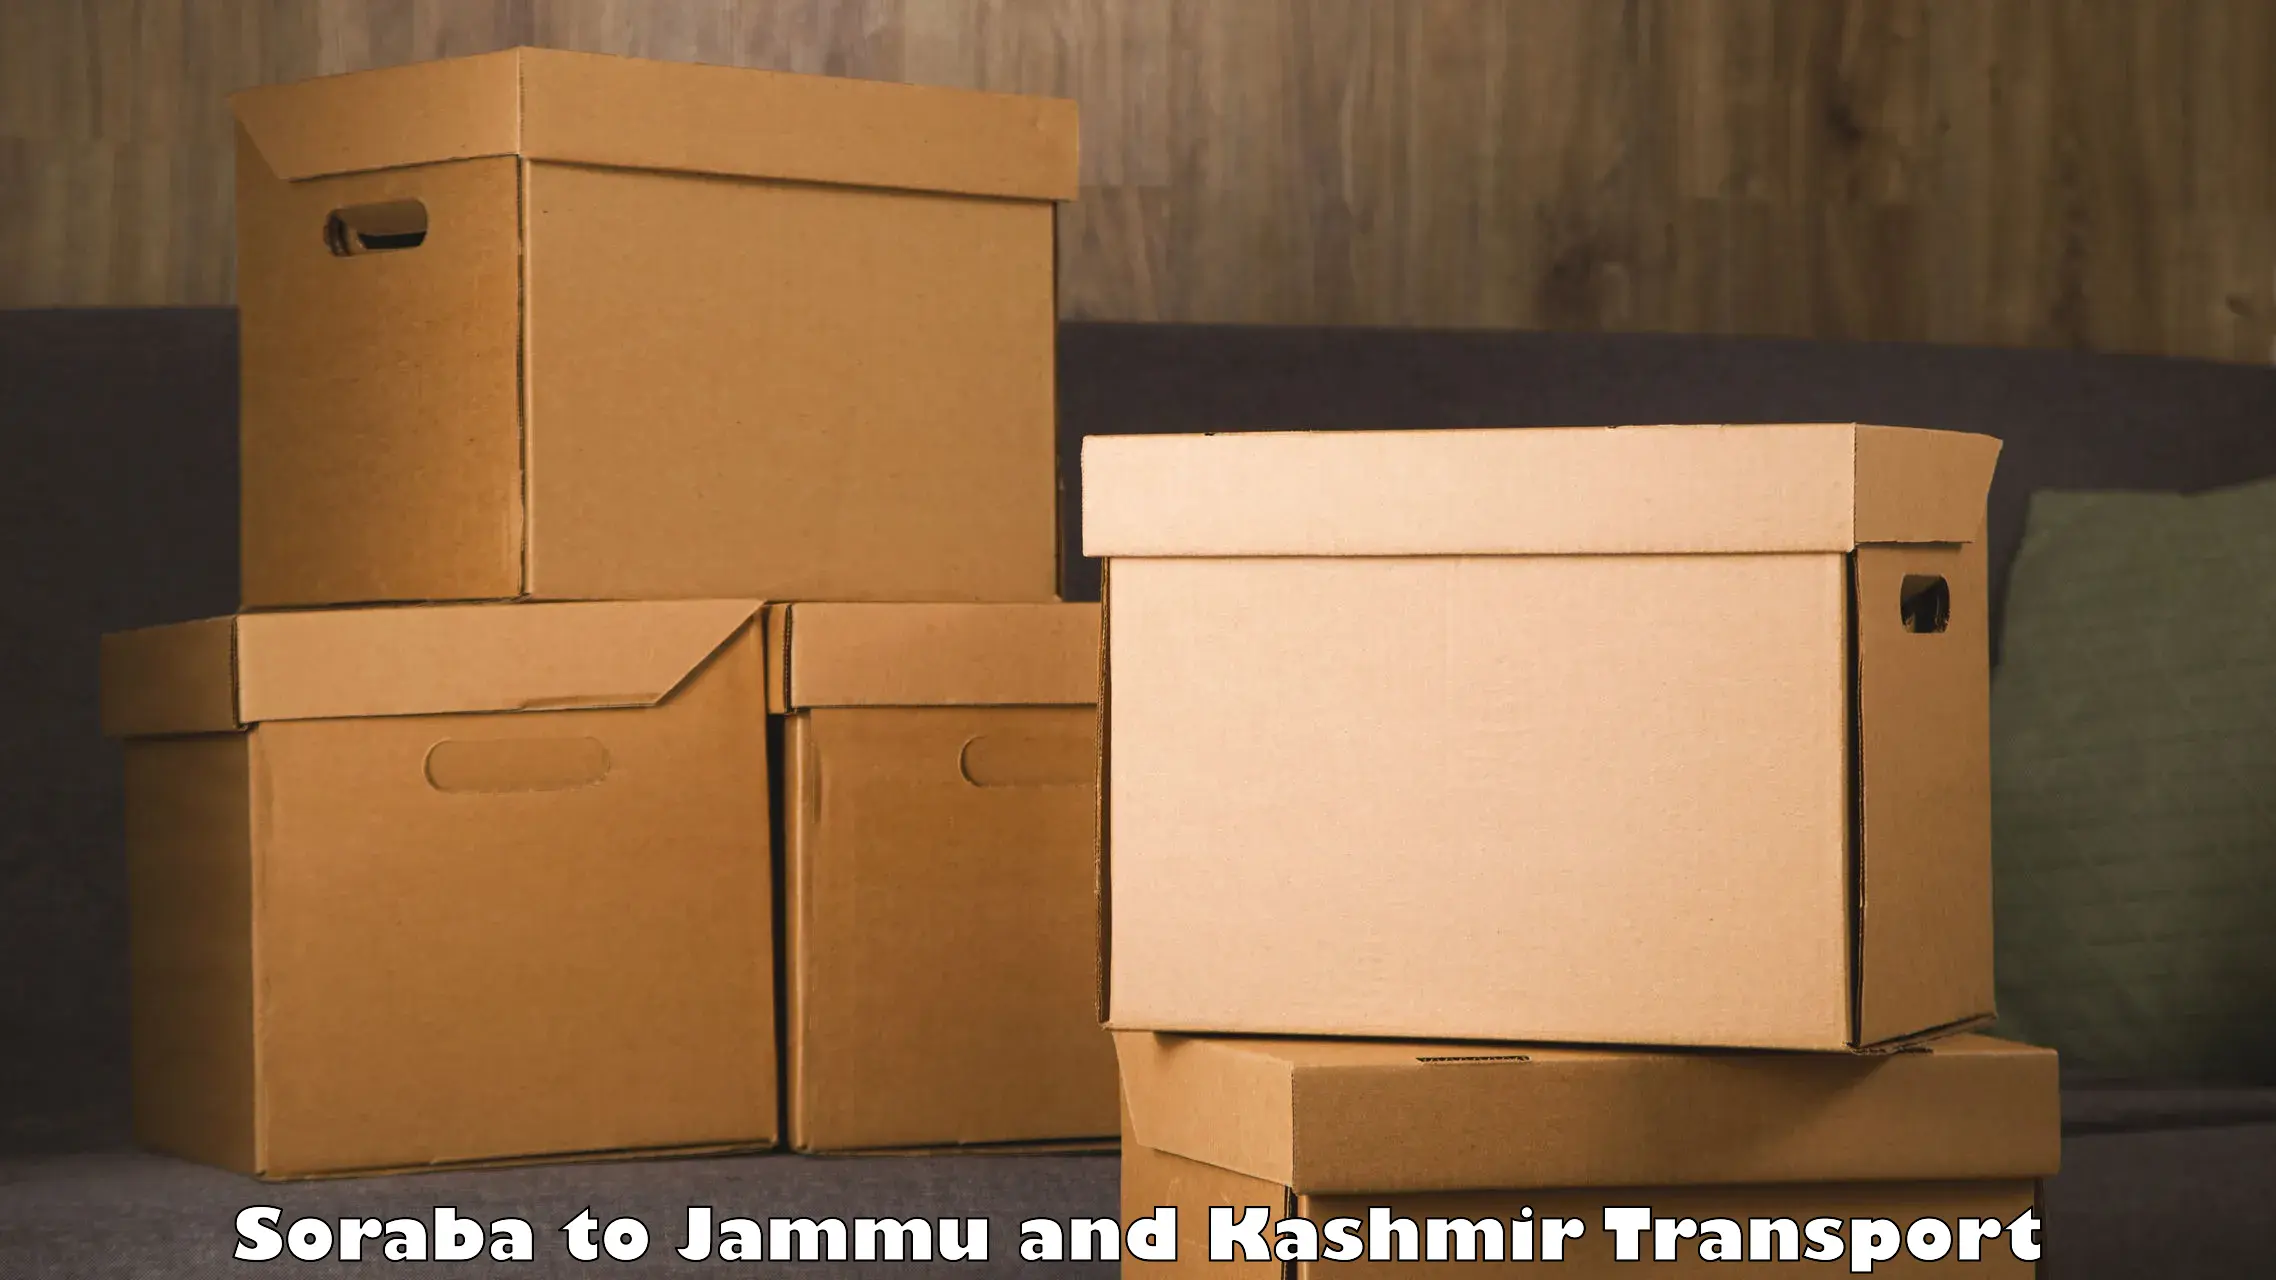 Cargo train transport services Soraba to Jammu and Kashmir